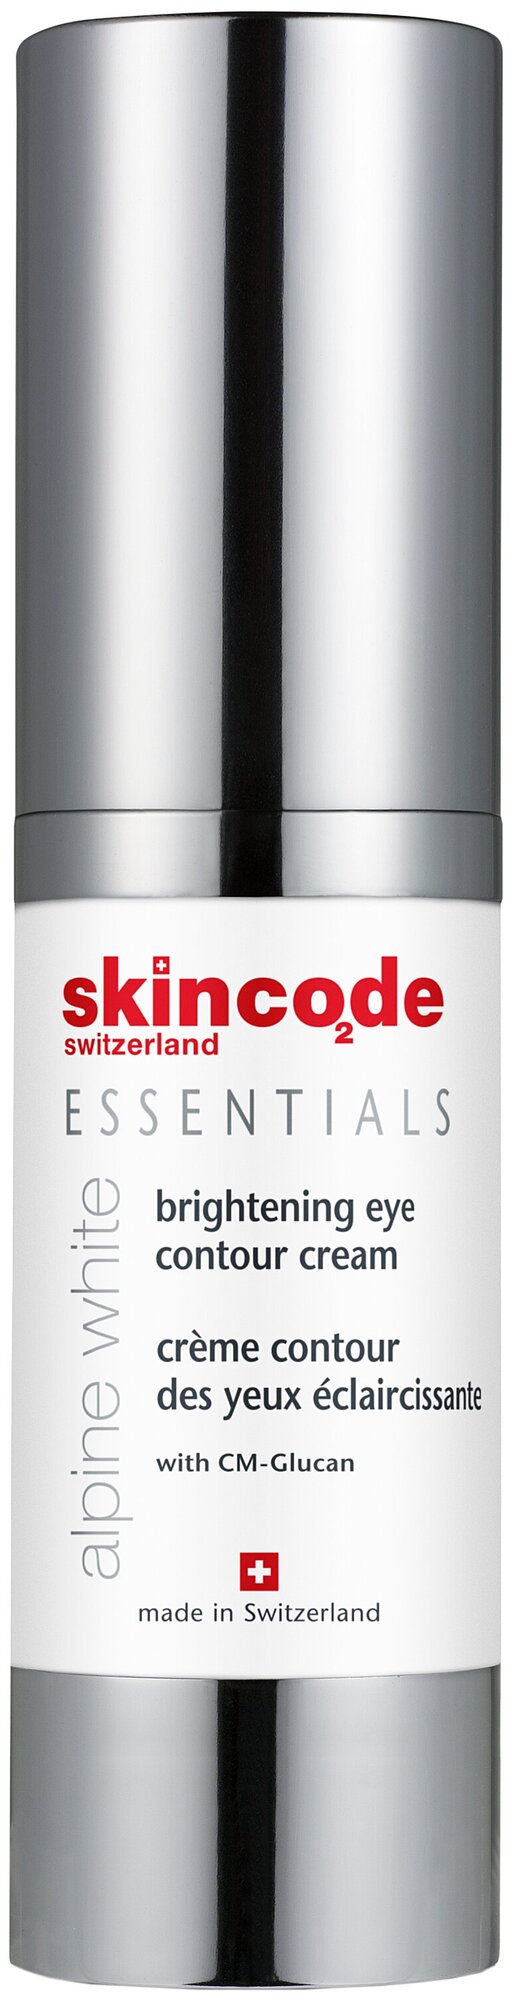 Skincode Осветляющий крем для контура глаз, 15 мл